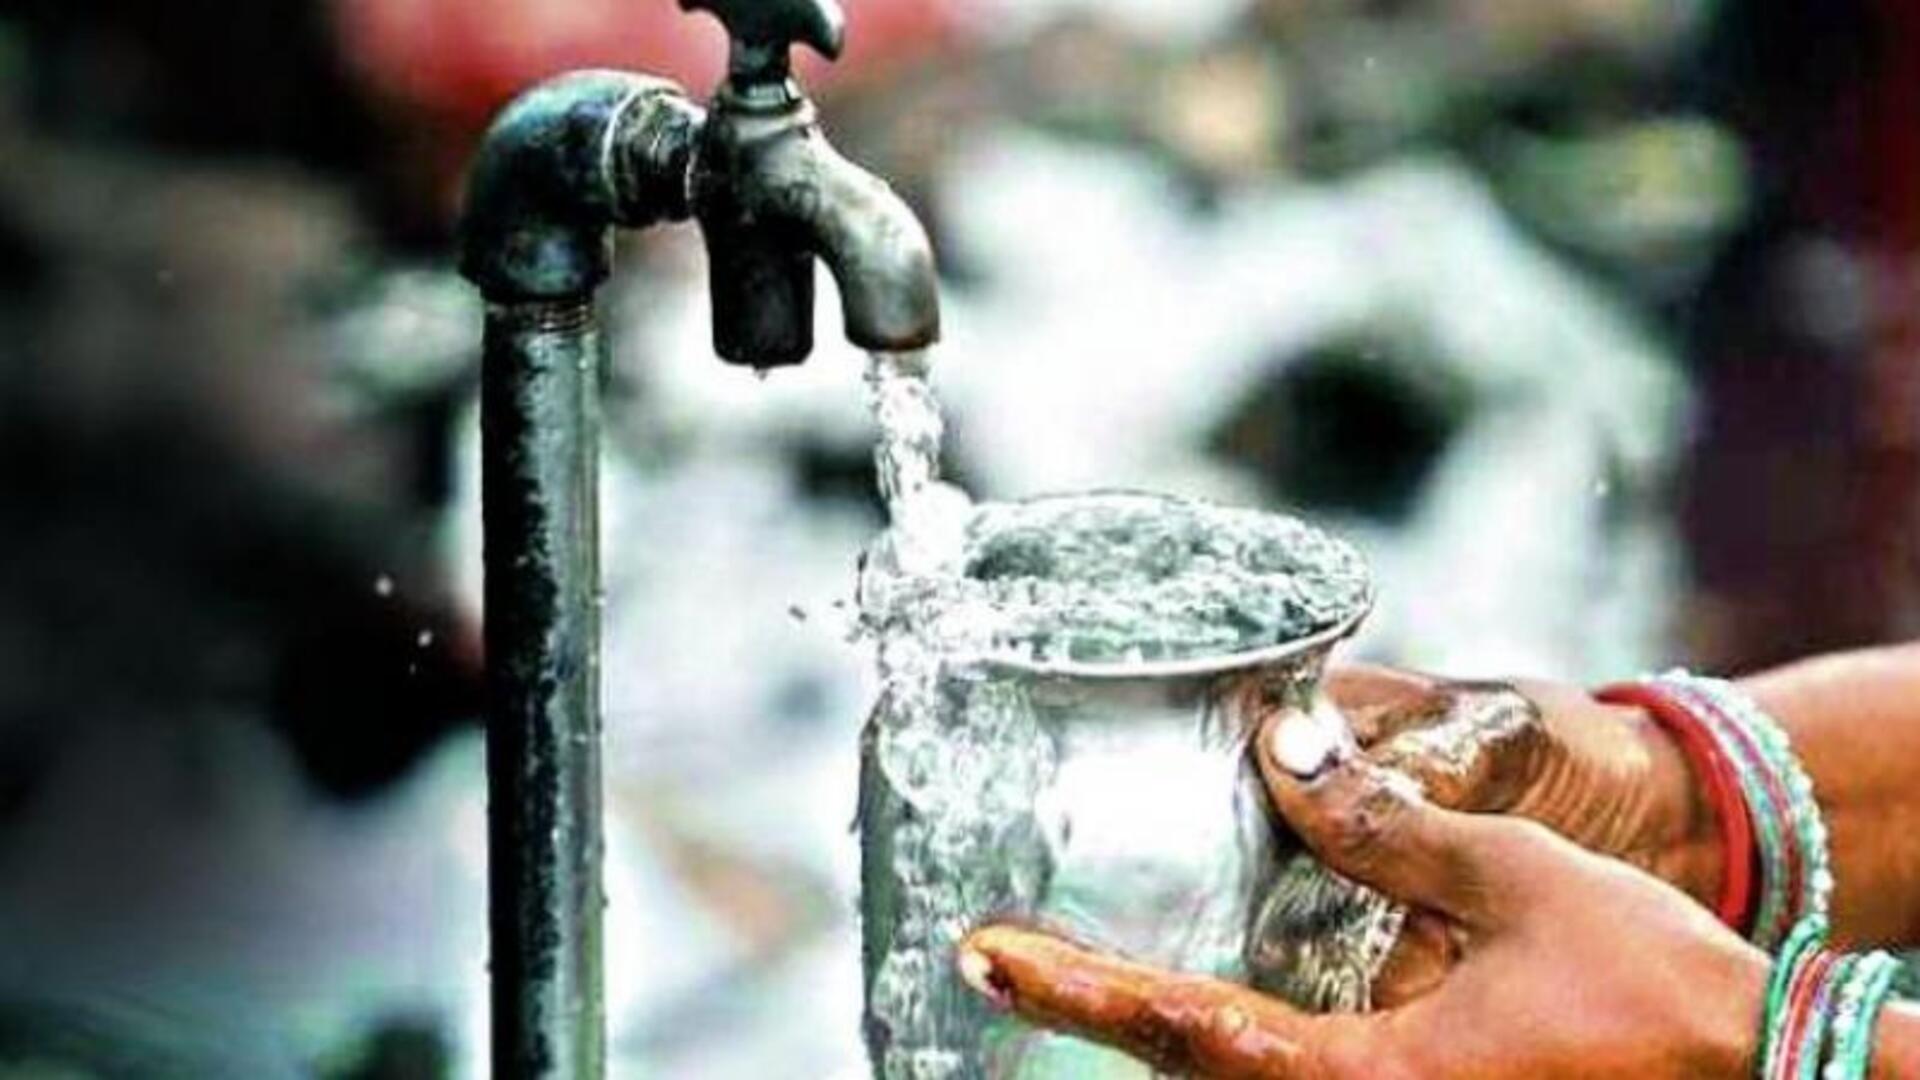 Bengaluru Water crisis : ‘Out of 14,000 bore wells in Bengaluru, 6,900 have dried’ says Karnataka CM Siddaramaiah